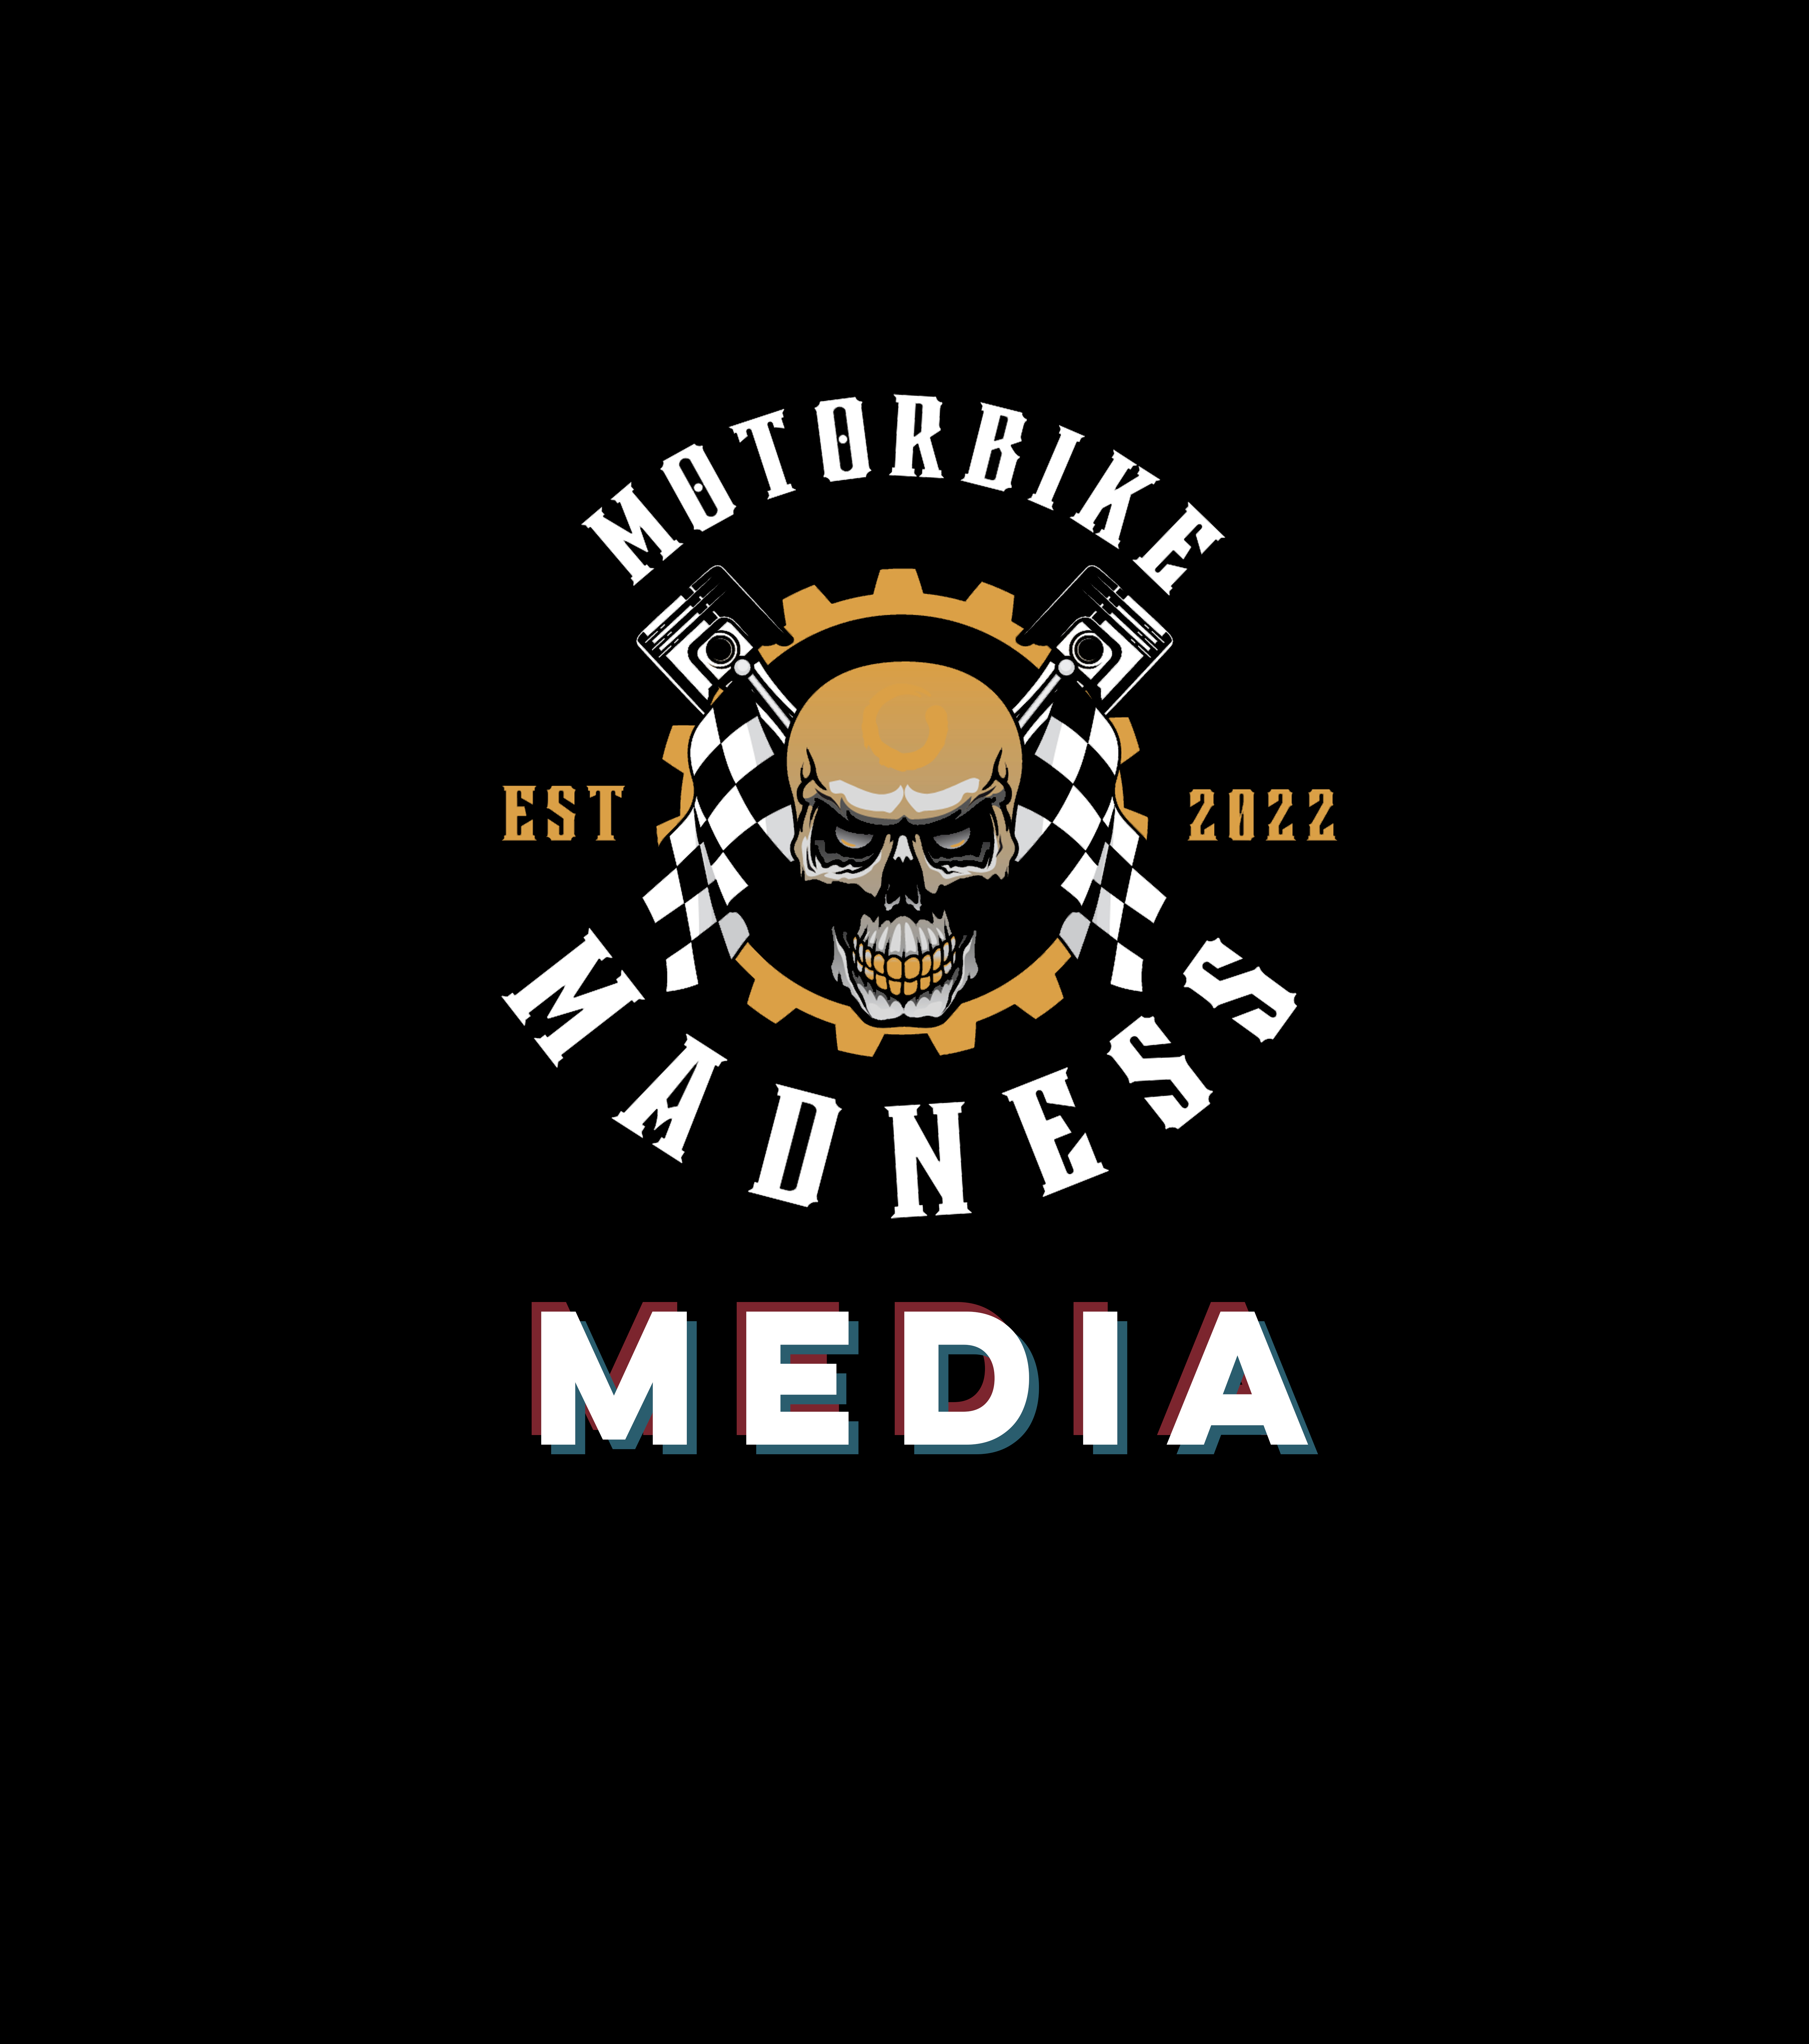 Motorbike Madness Media Logo